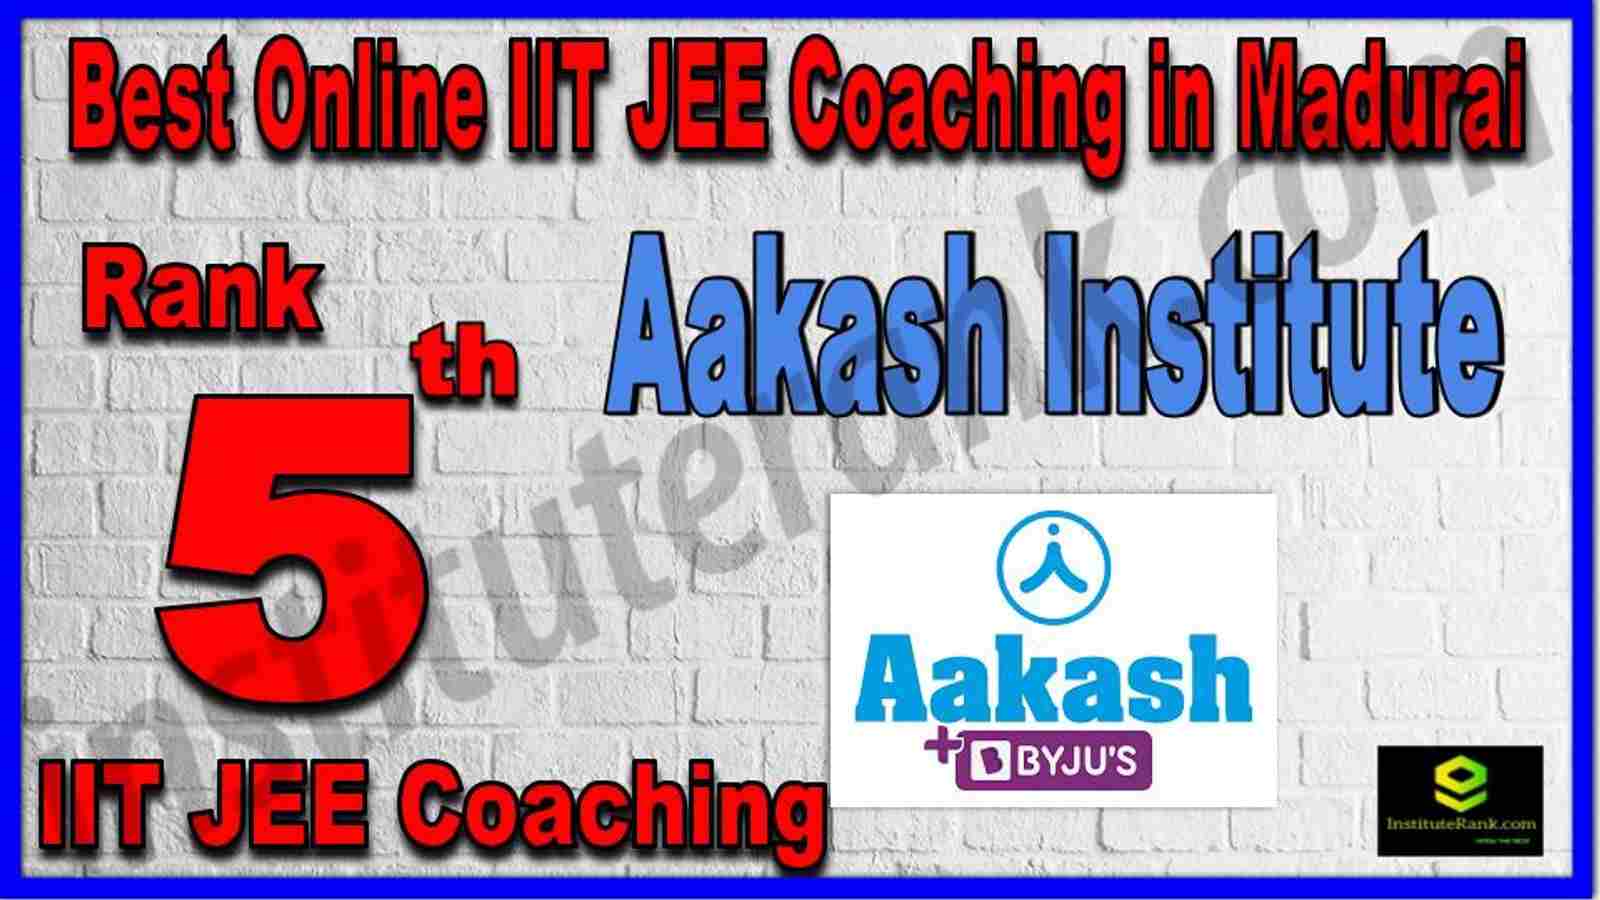 Rank 5th Best Online IIT JEE Coaching in Madurai